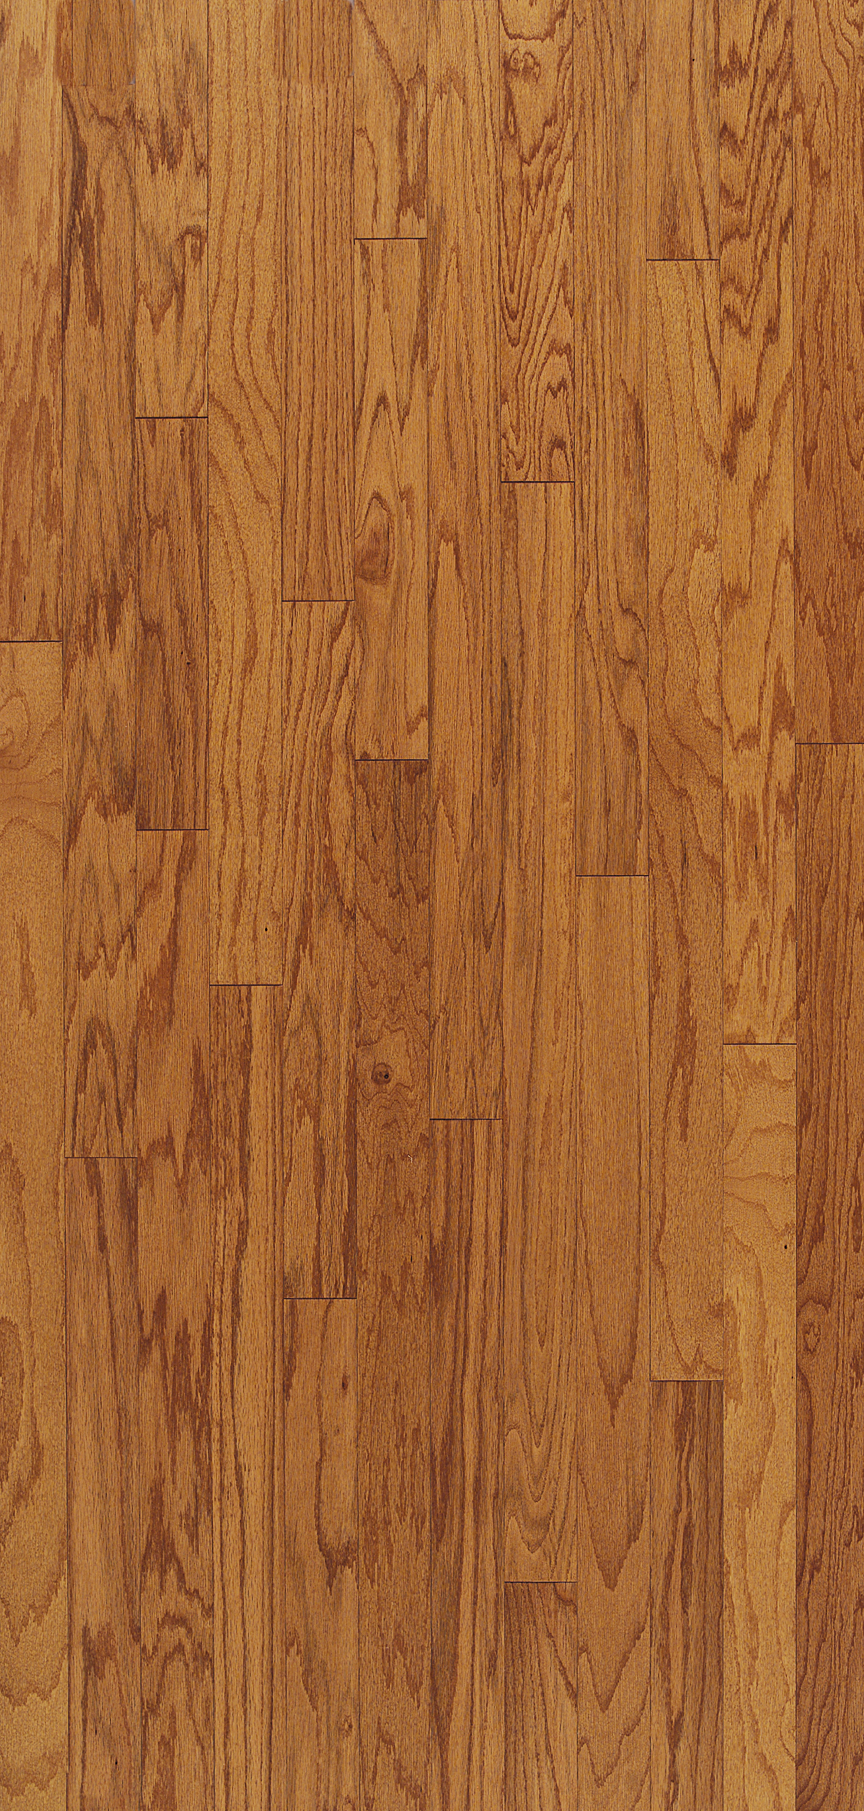 Butterscotch Oak 5" - Turlington Lock&Fold Collection - Engineered Hardwood Flooring by Bruce